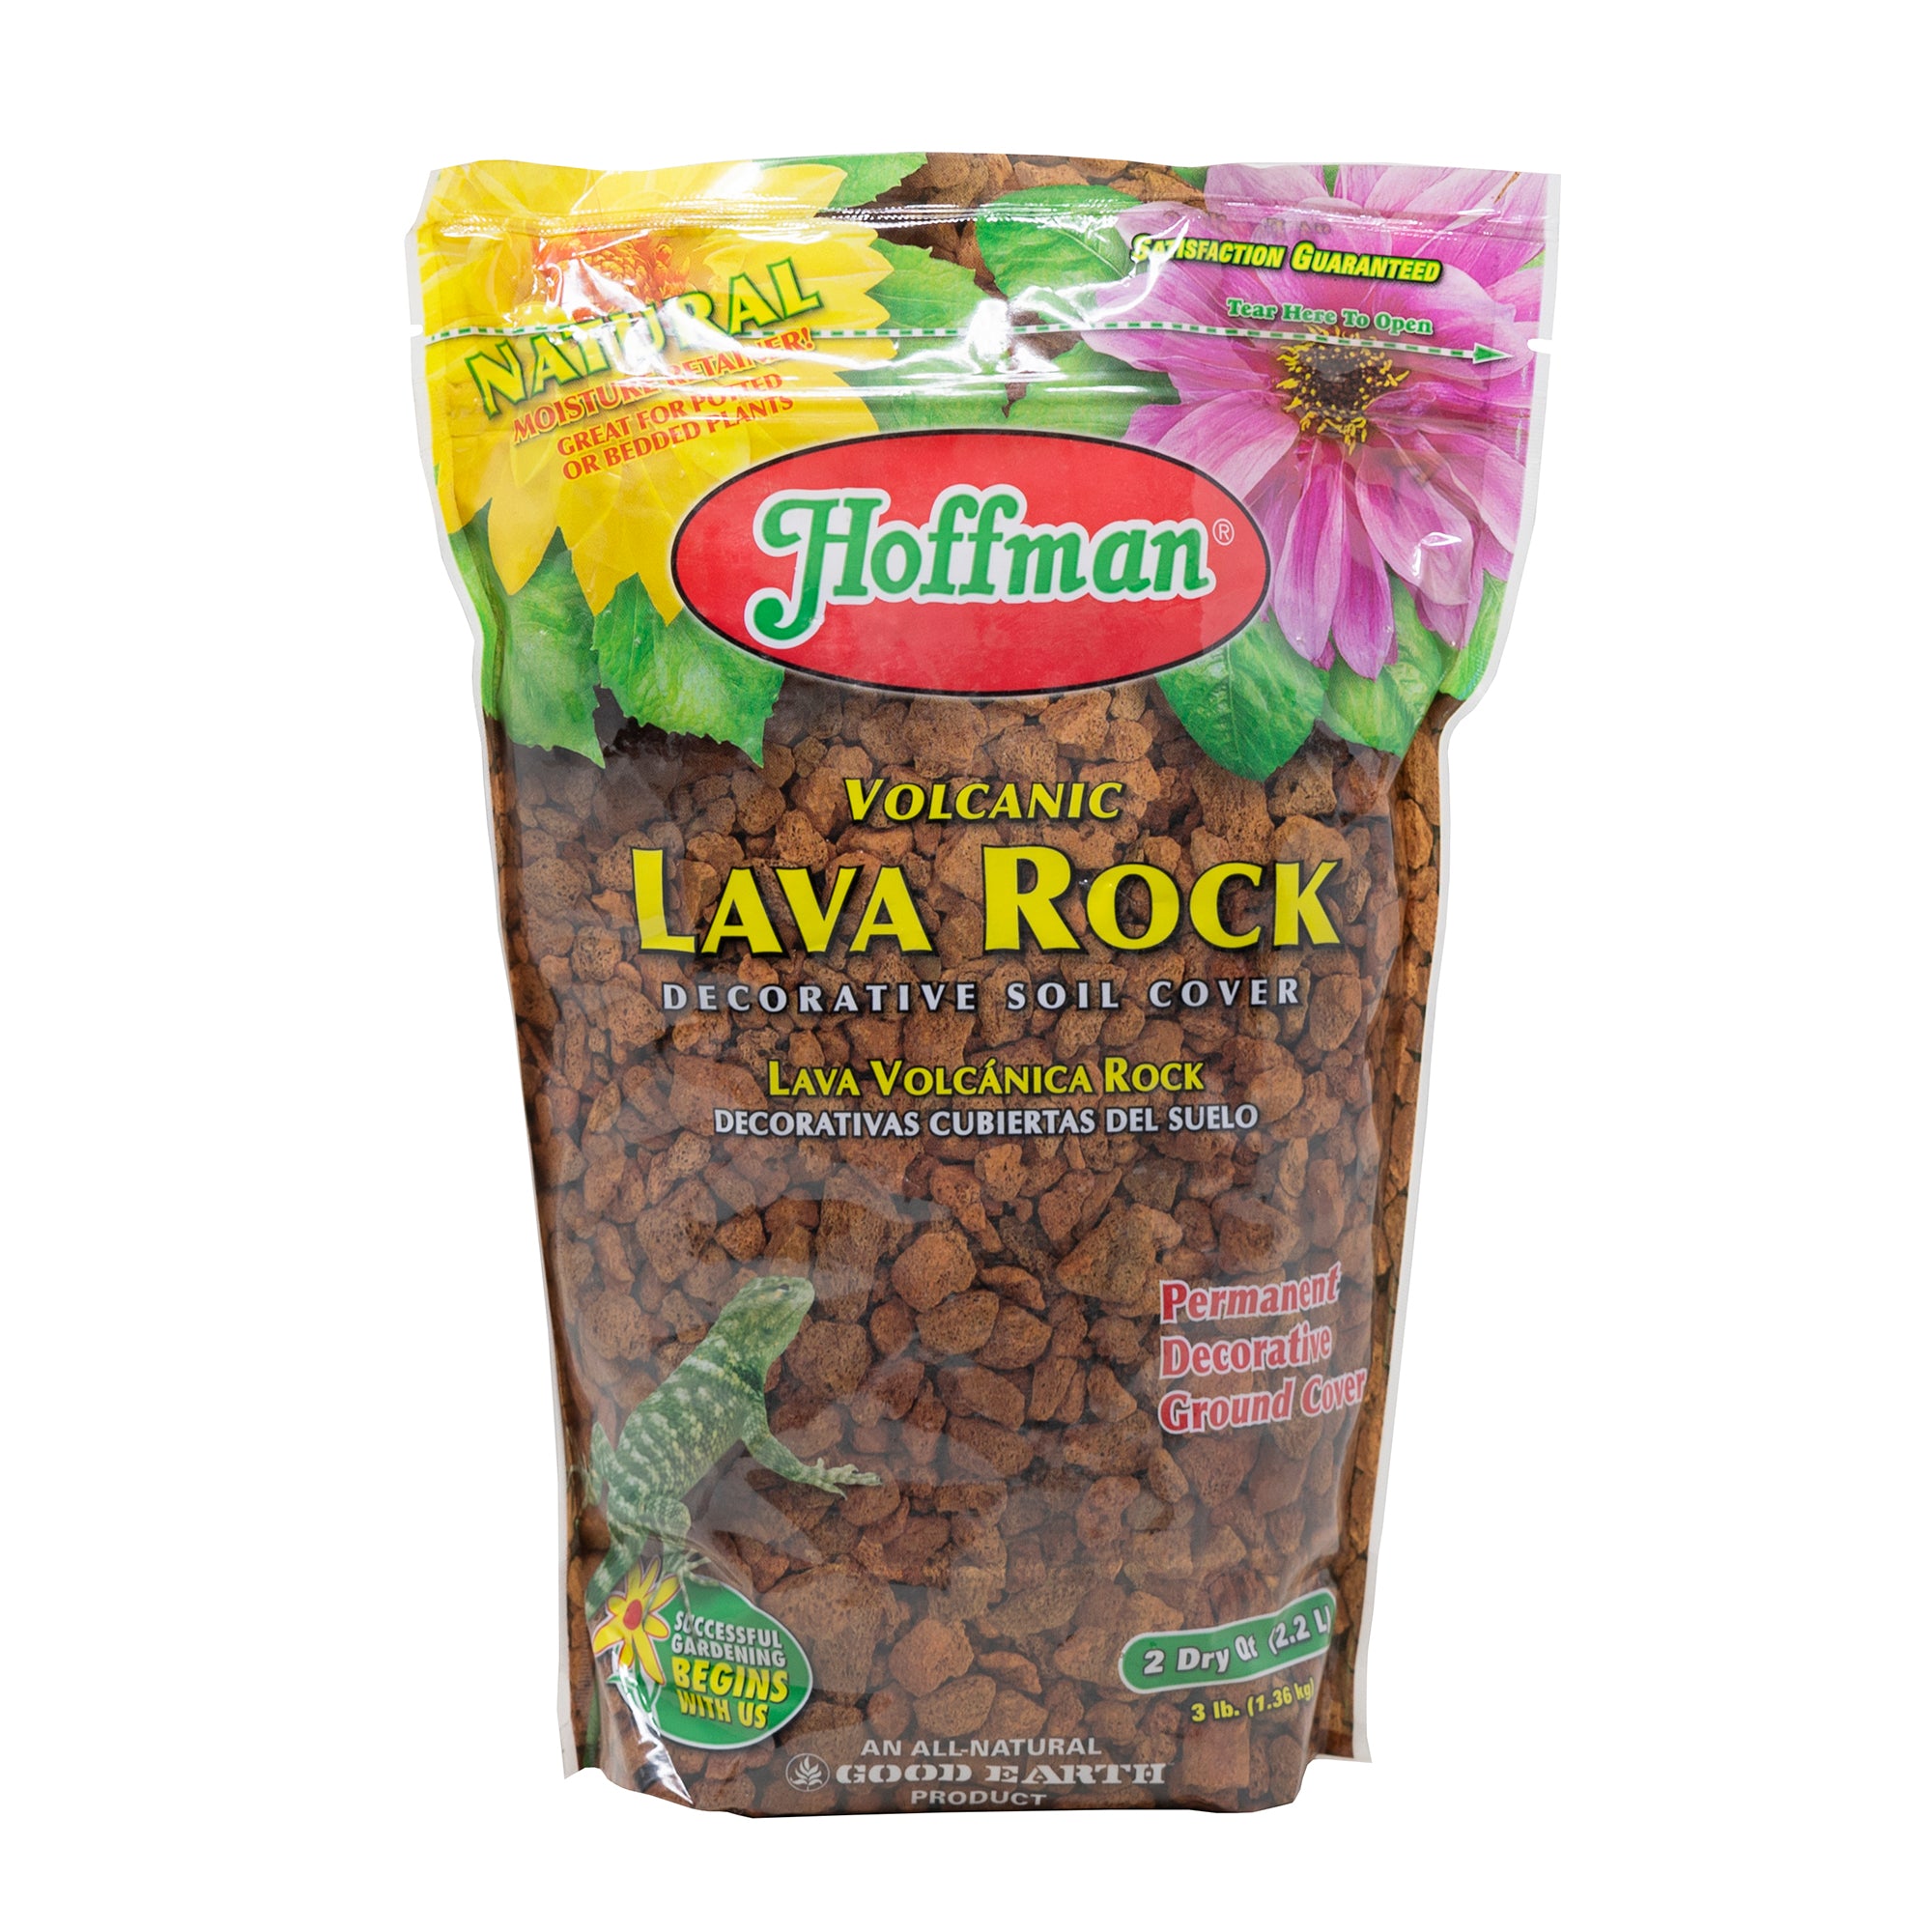 Hoffman Volcanic Lava Rock Soil Cover, 2 Quart Bag